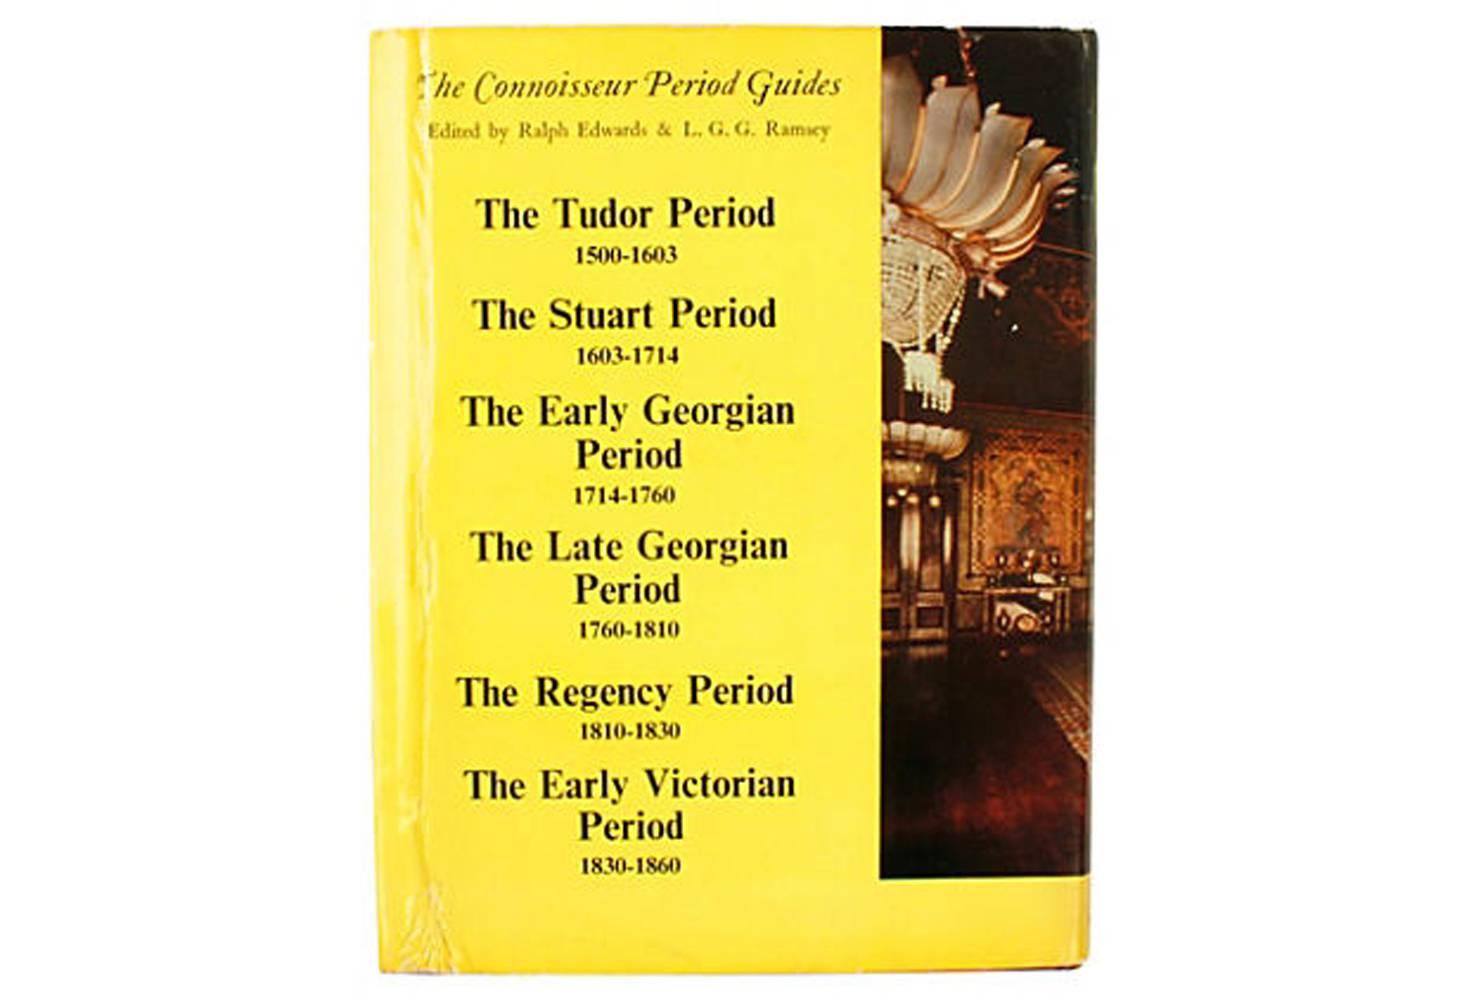 Regency Period: 1810-1830, 1st Edition 3